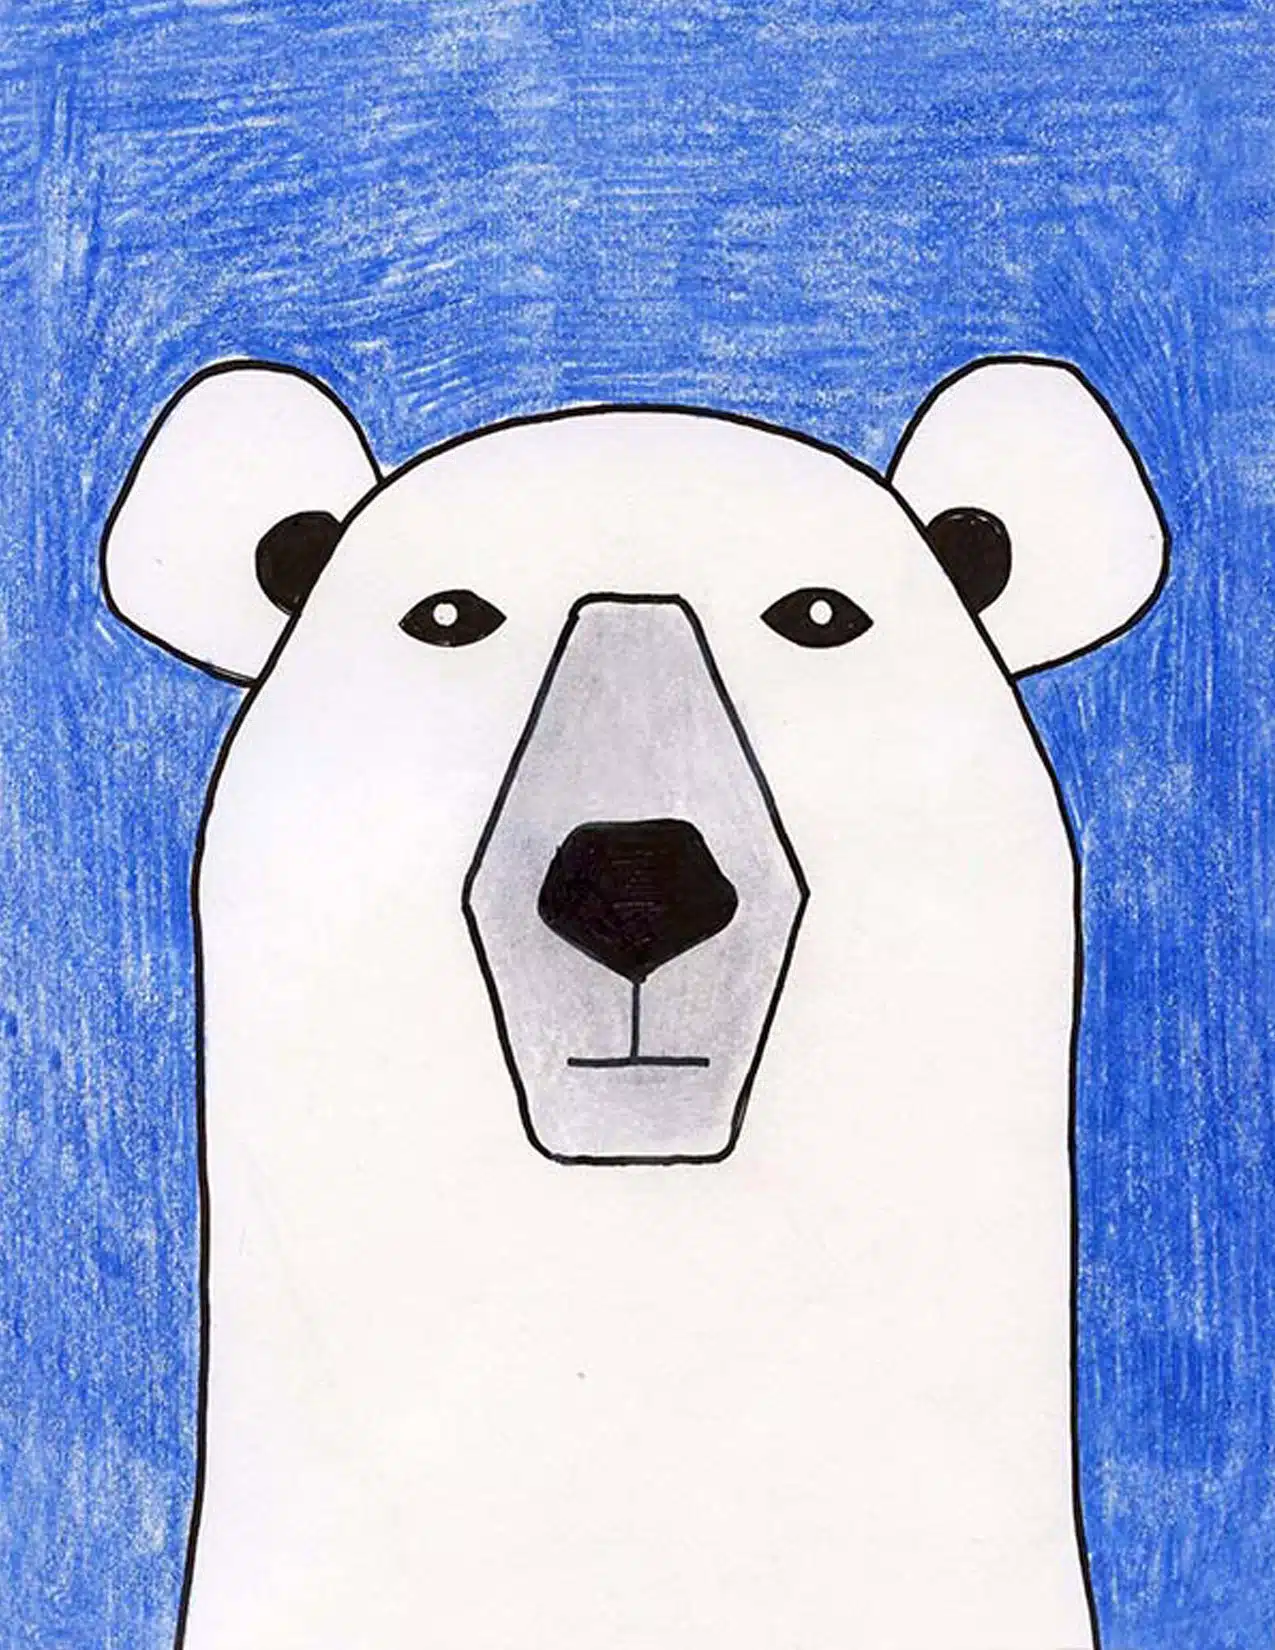 Polar bear in its natural habitat on Craiyon